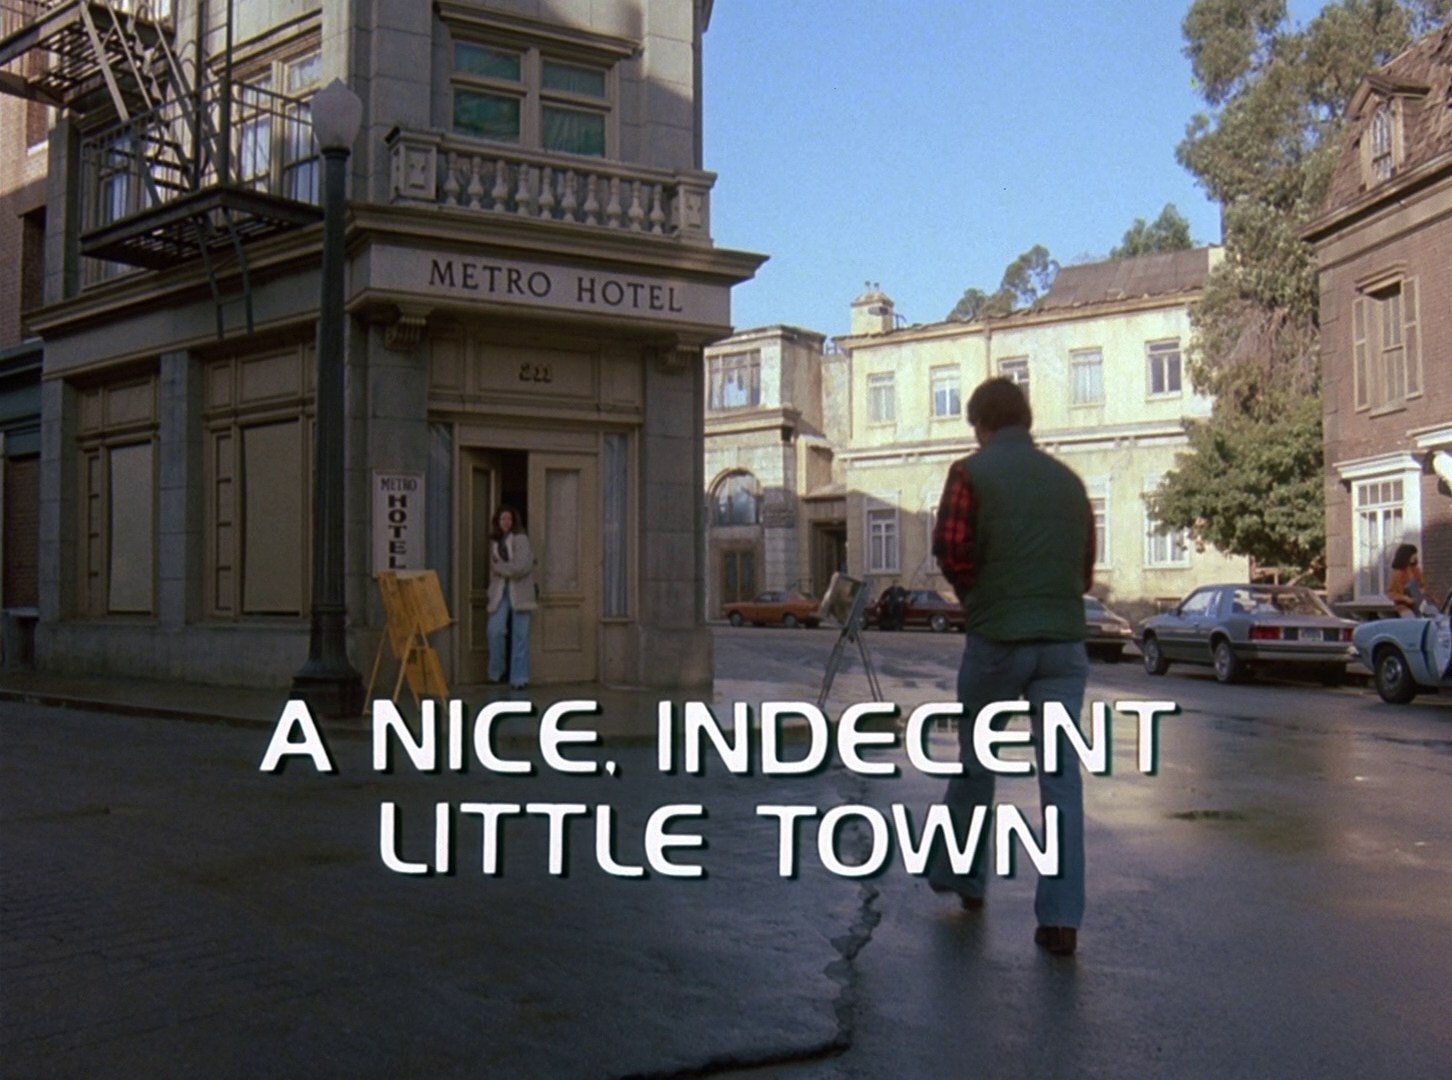 Knight Rider Season 1 - Episode 16 - A Nice, Indecent Little Town - Photo 1